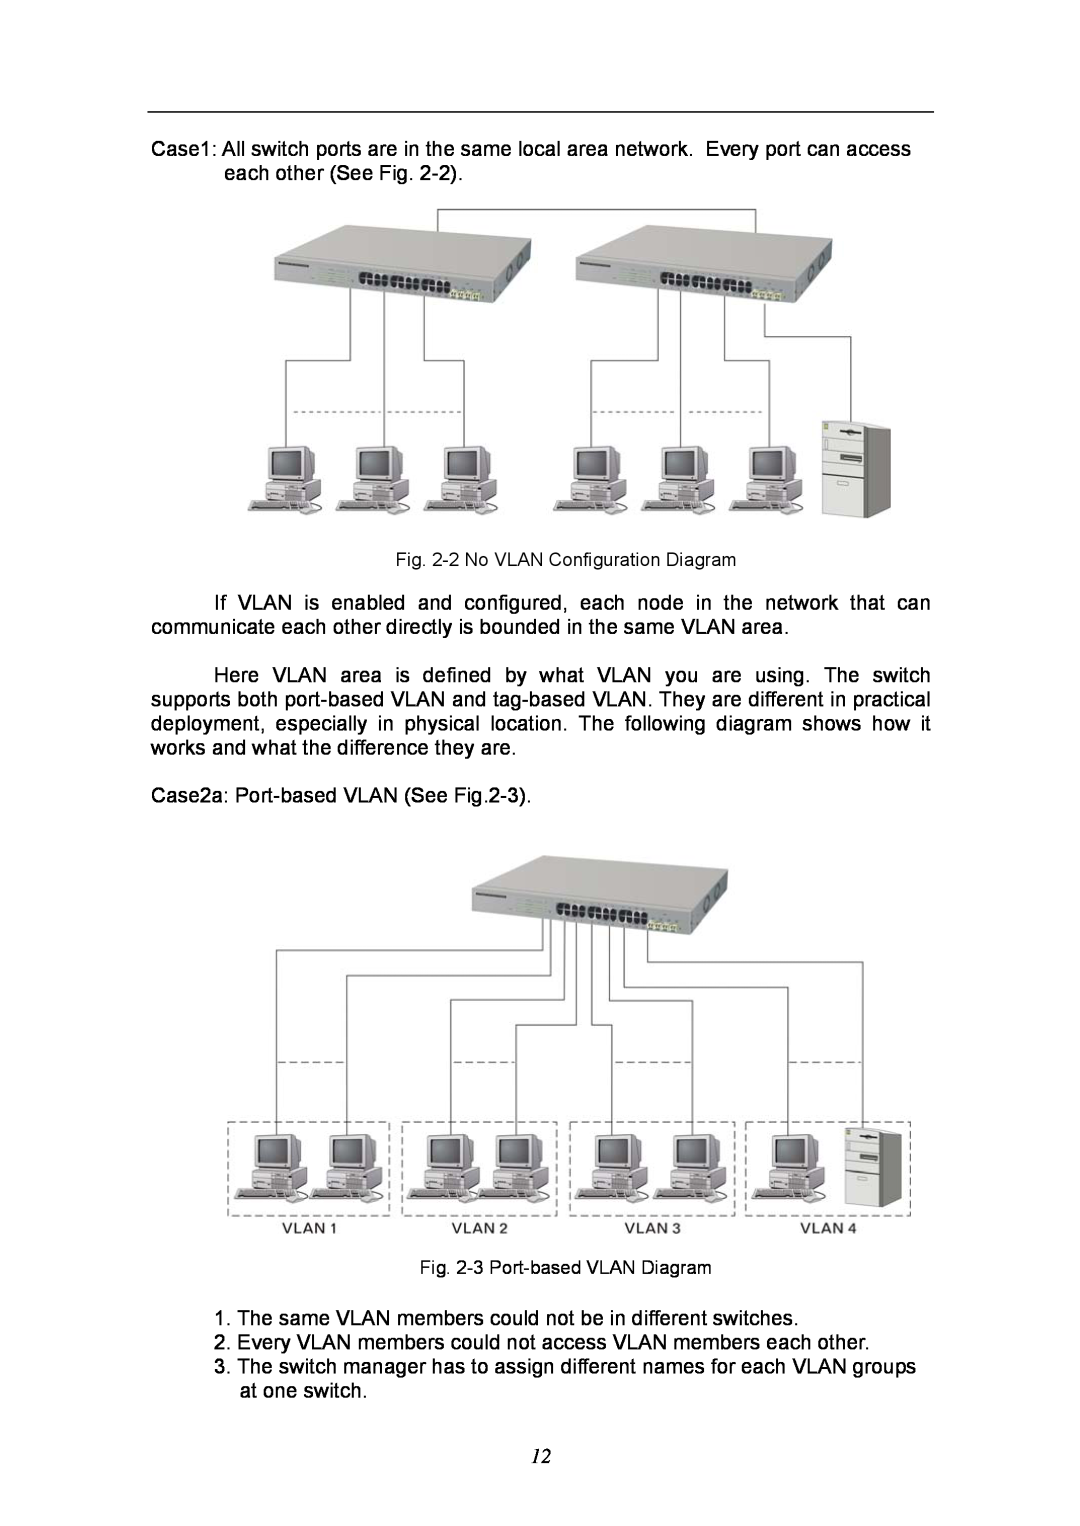 KTI Networks KGS-2404 manual Case2a Port-based VLAN See -3 